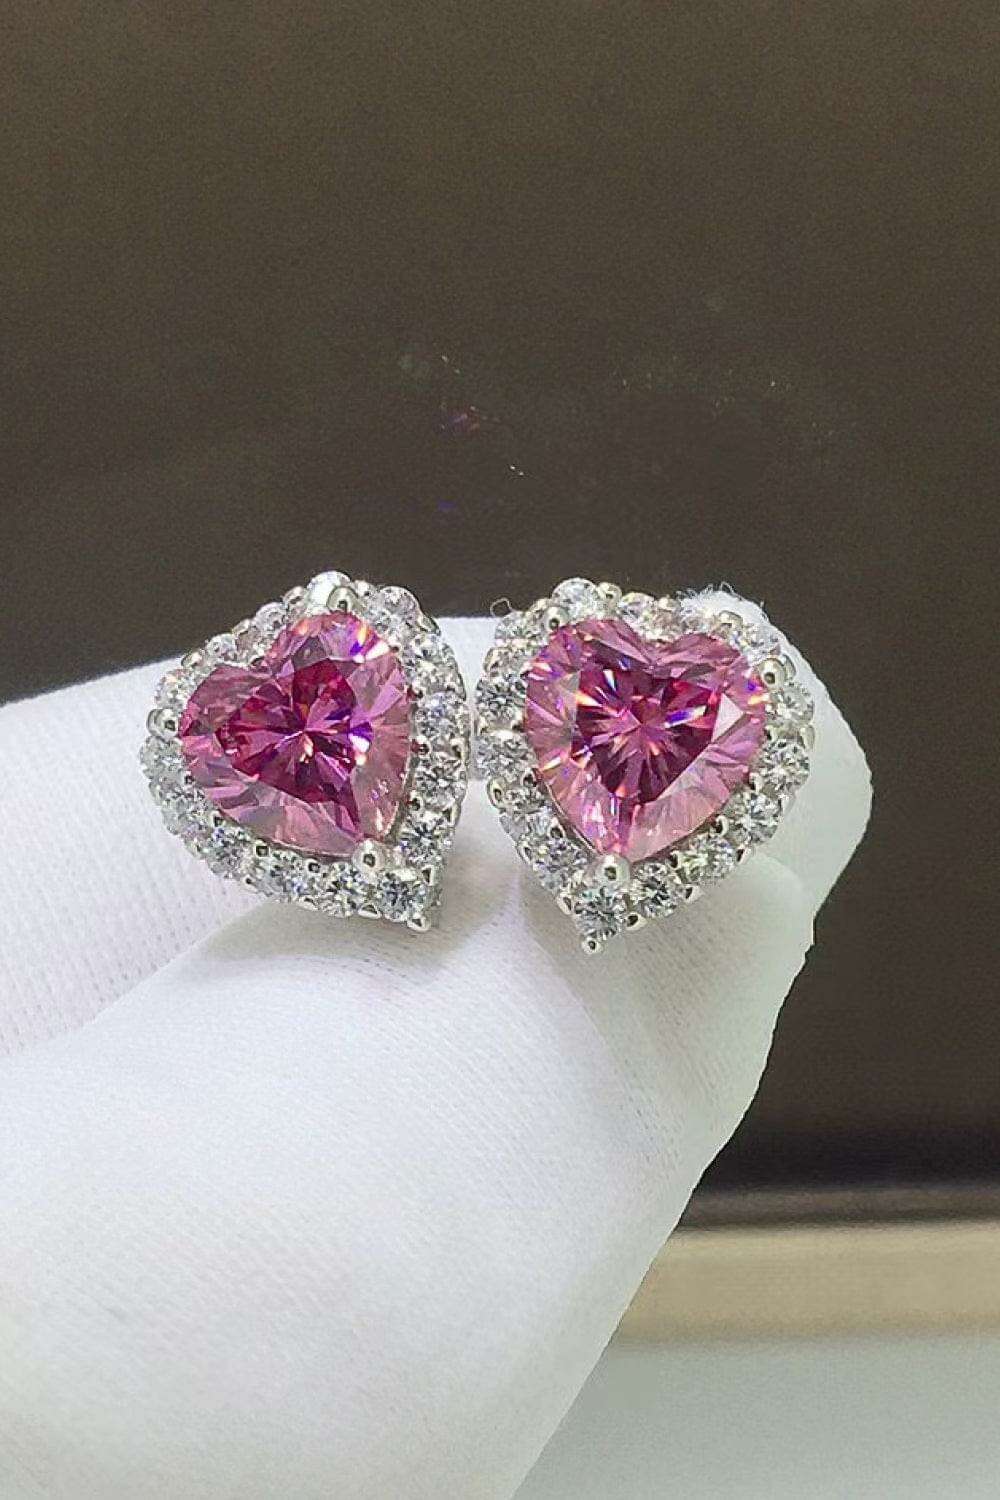 - 2 Carat Moissanite Heart-Shaped Earrings - earrings at TFC&H Co.